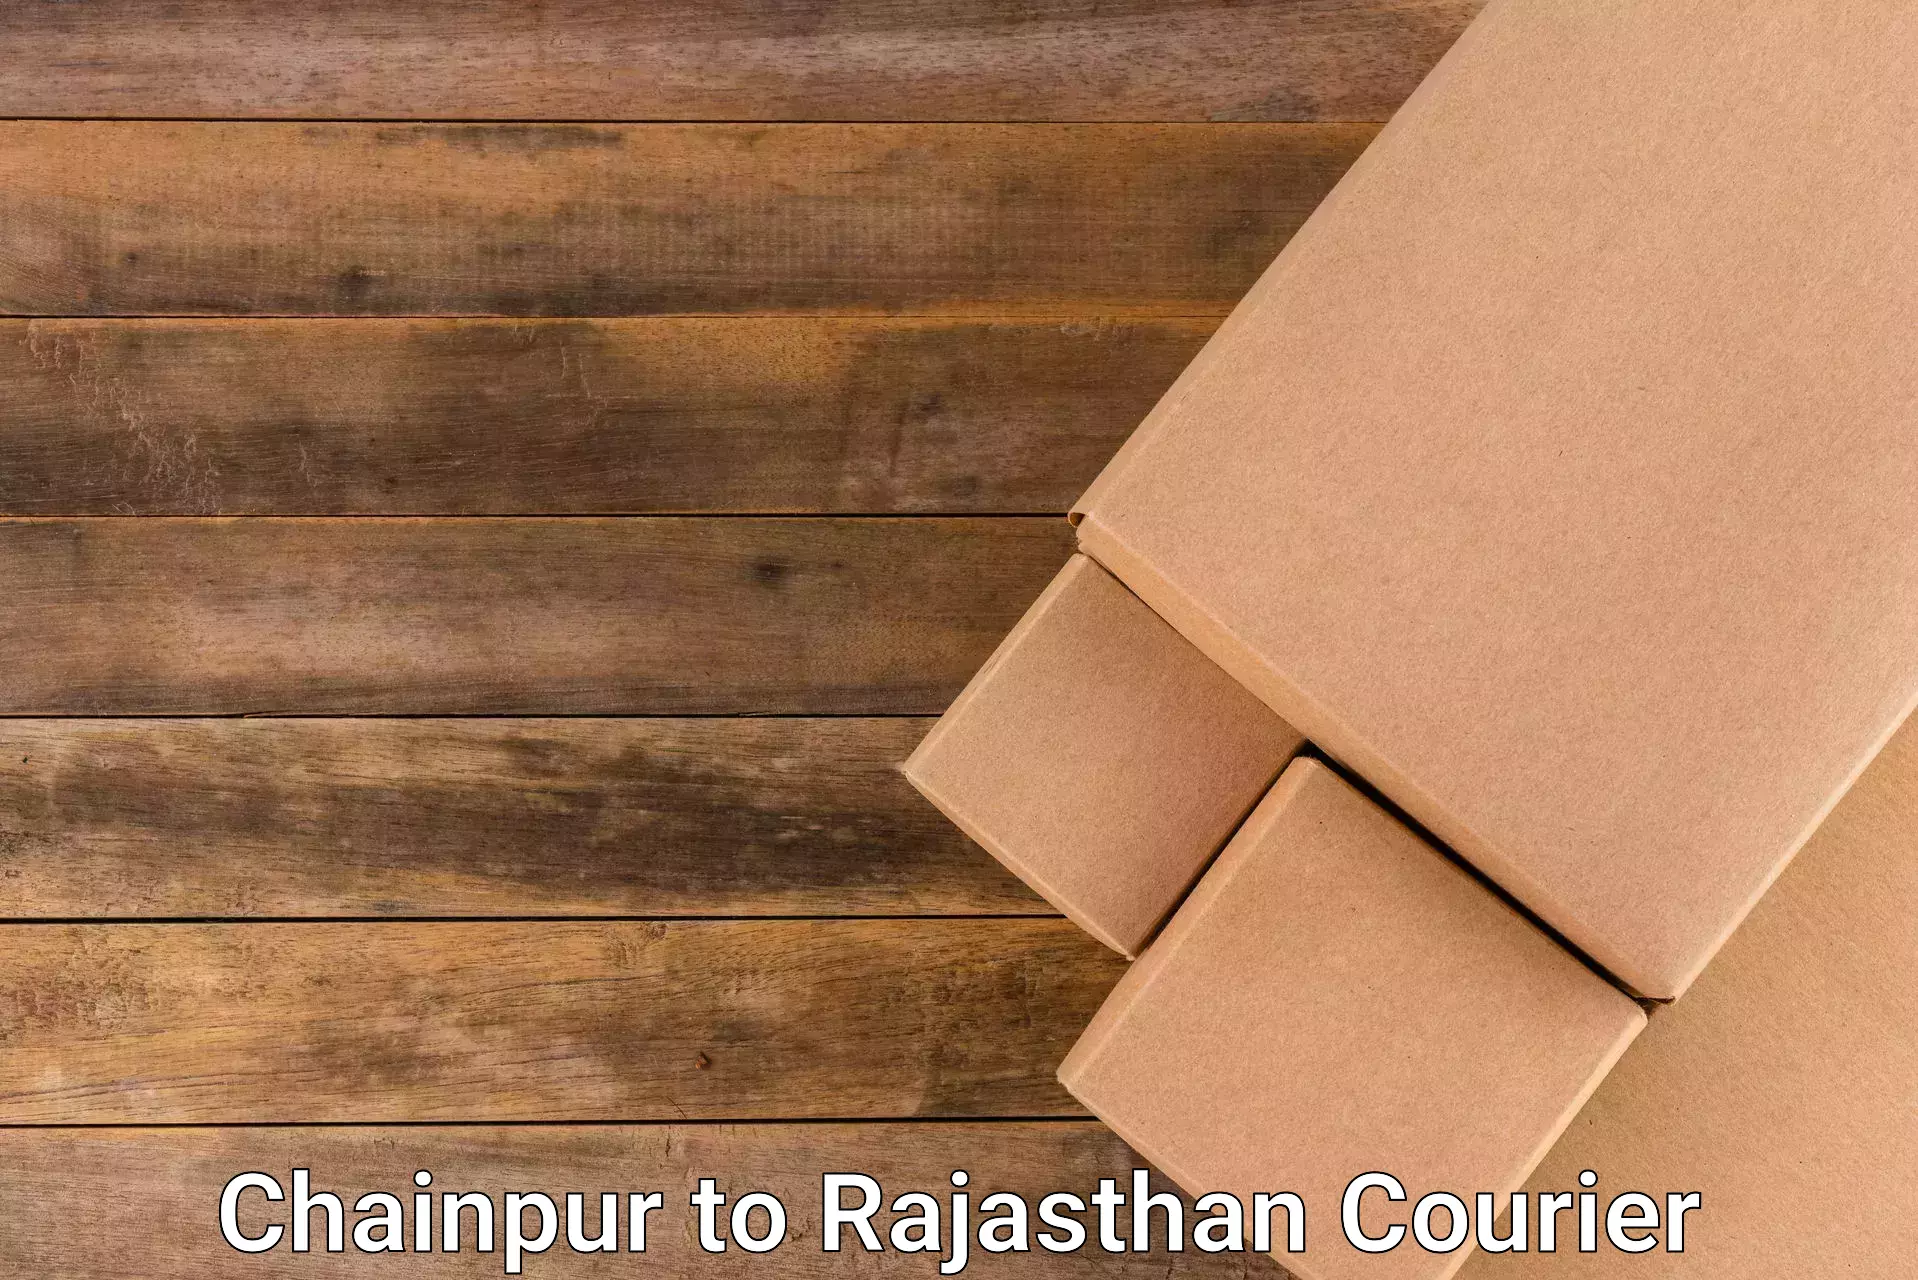 Express logistics service Chainpur to Pokhran